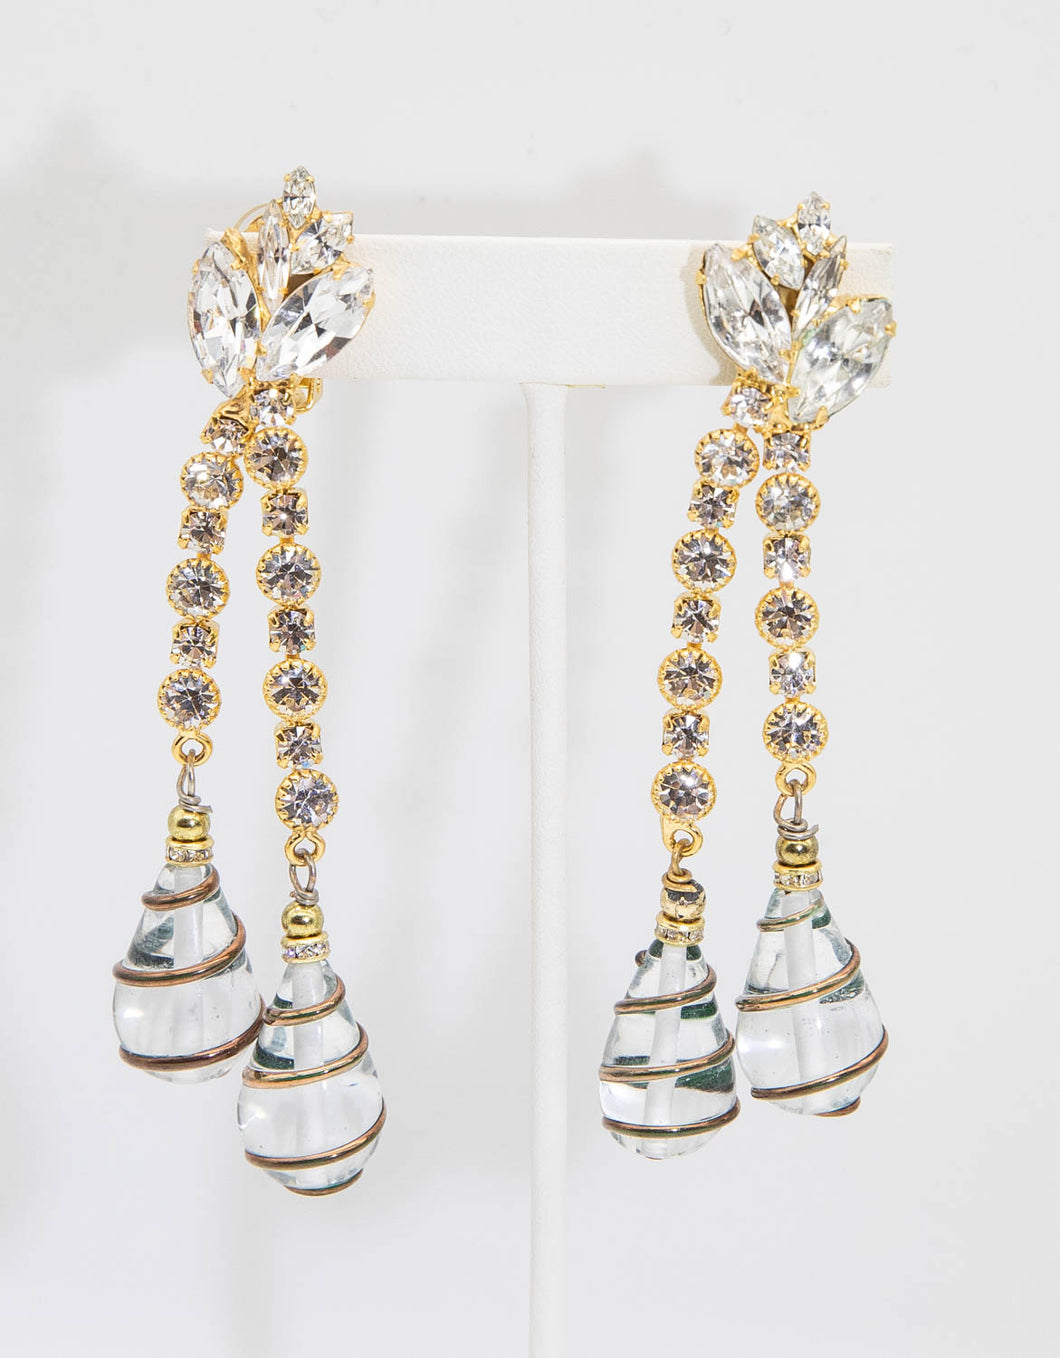 Vintage Robert Sorrell Rhinestone and Glass Drops Earrings  - JD10811